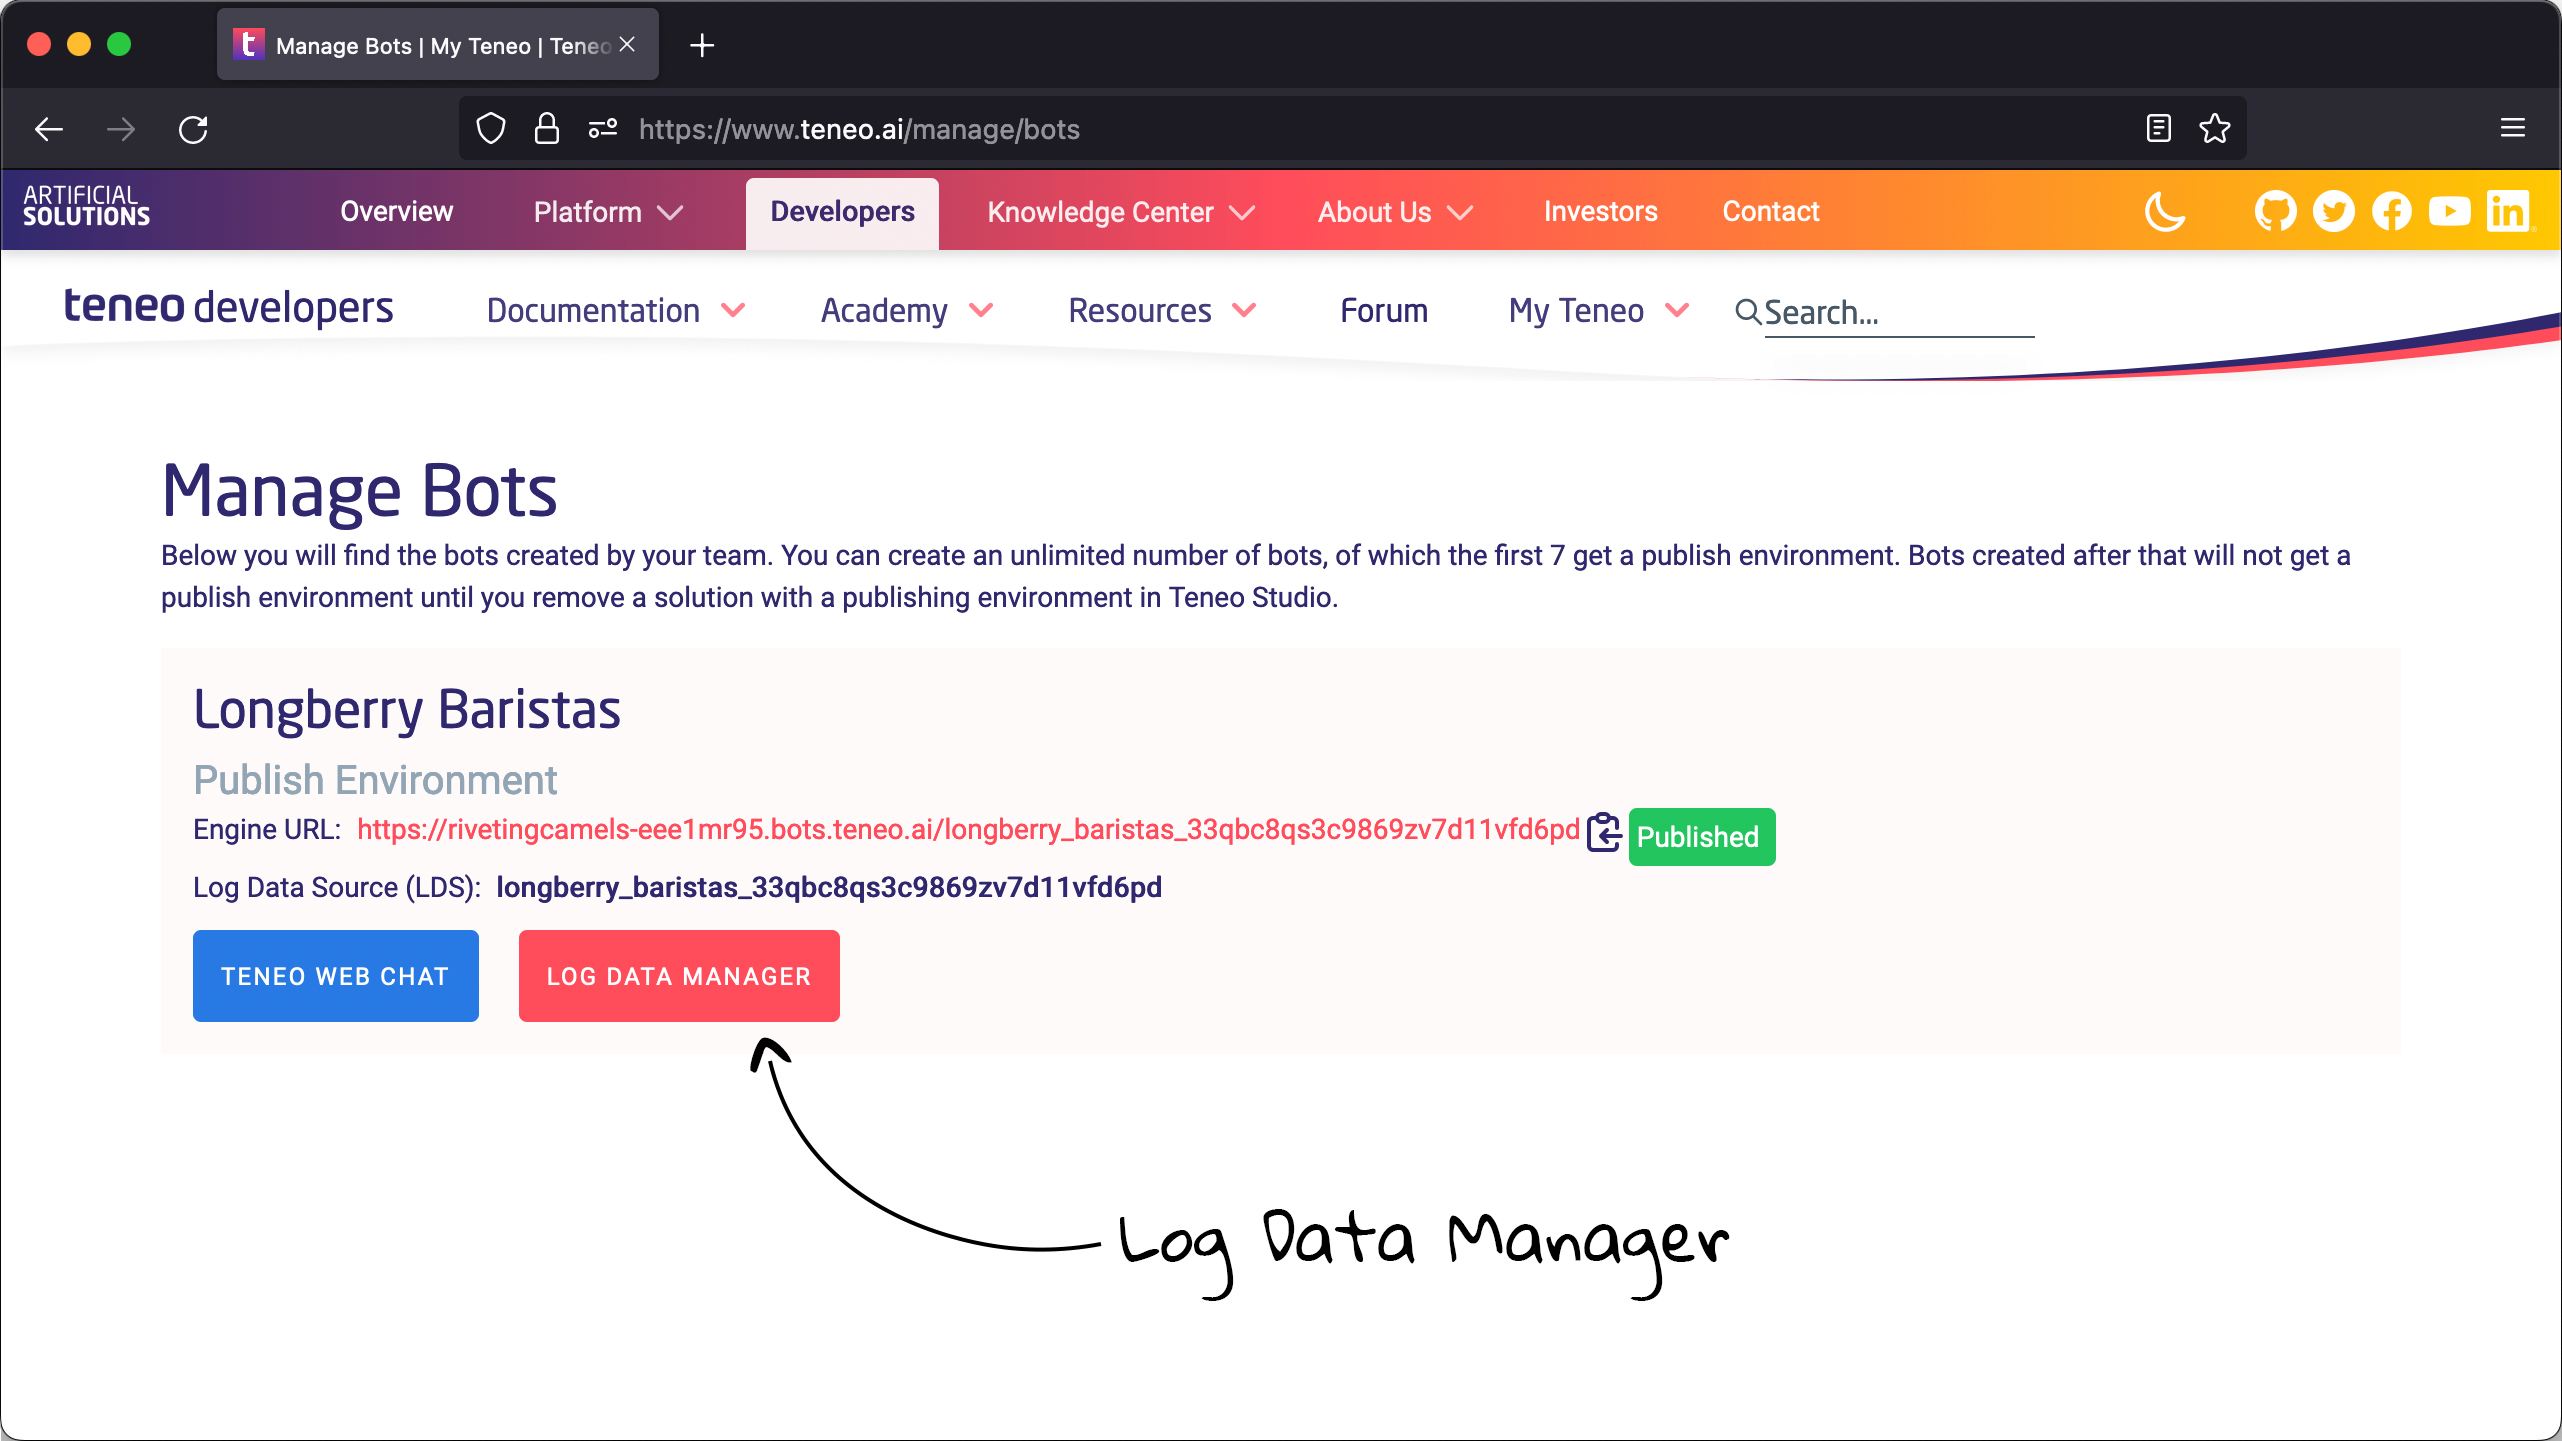 log data manager